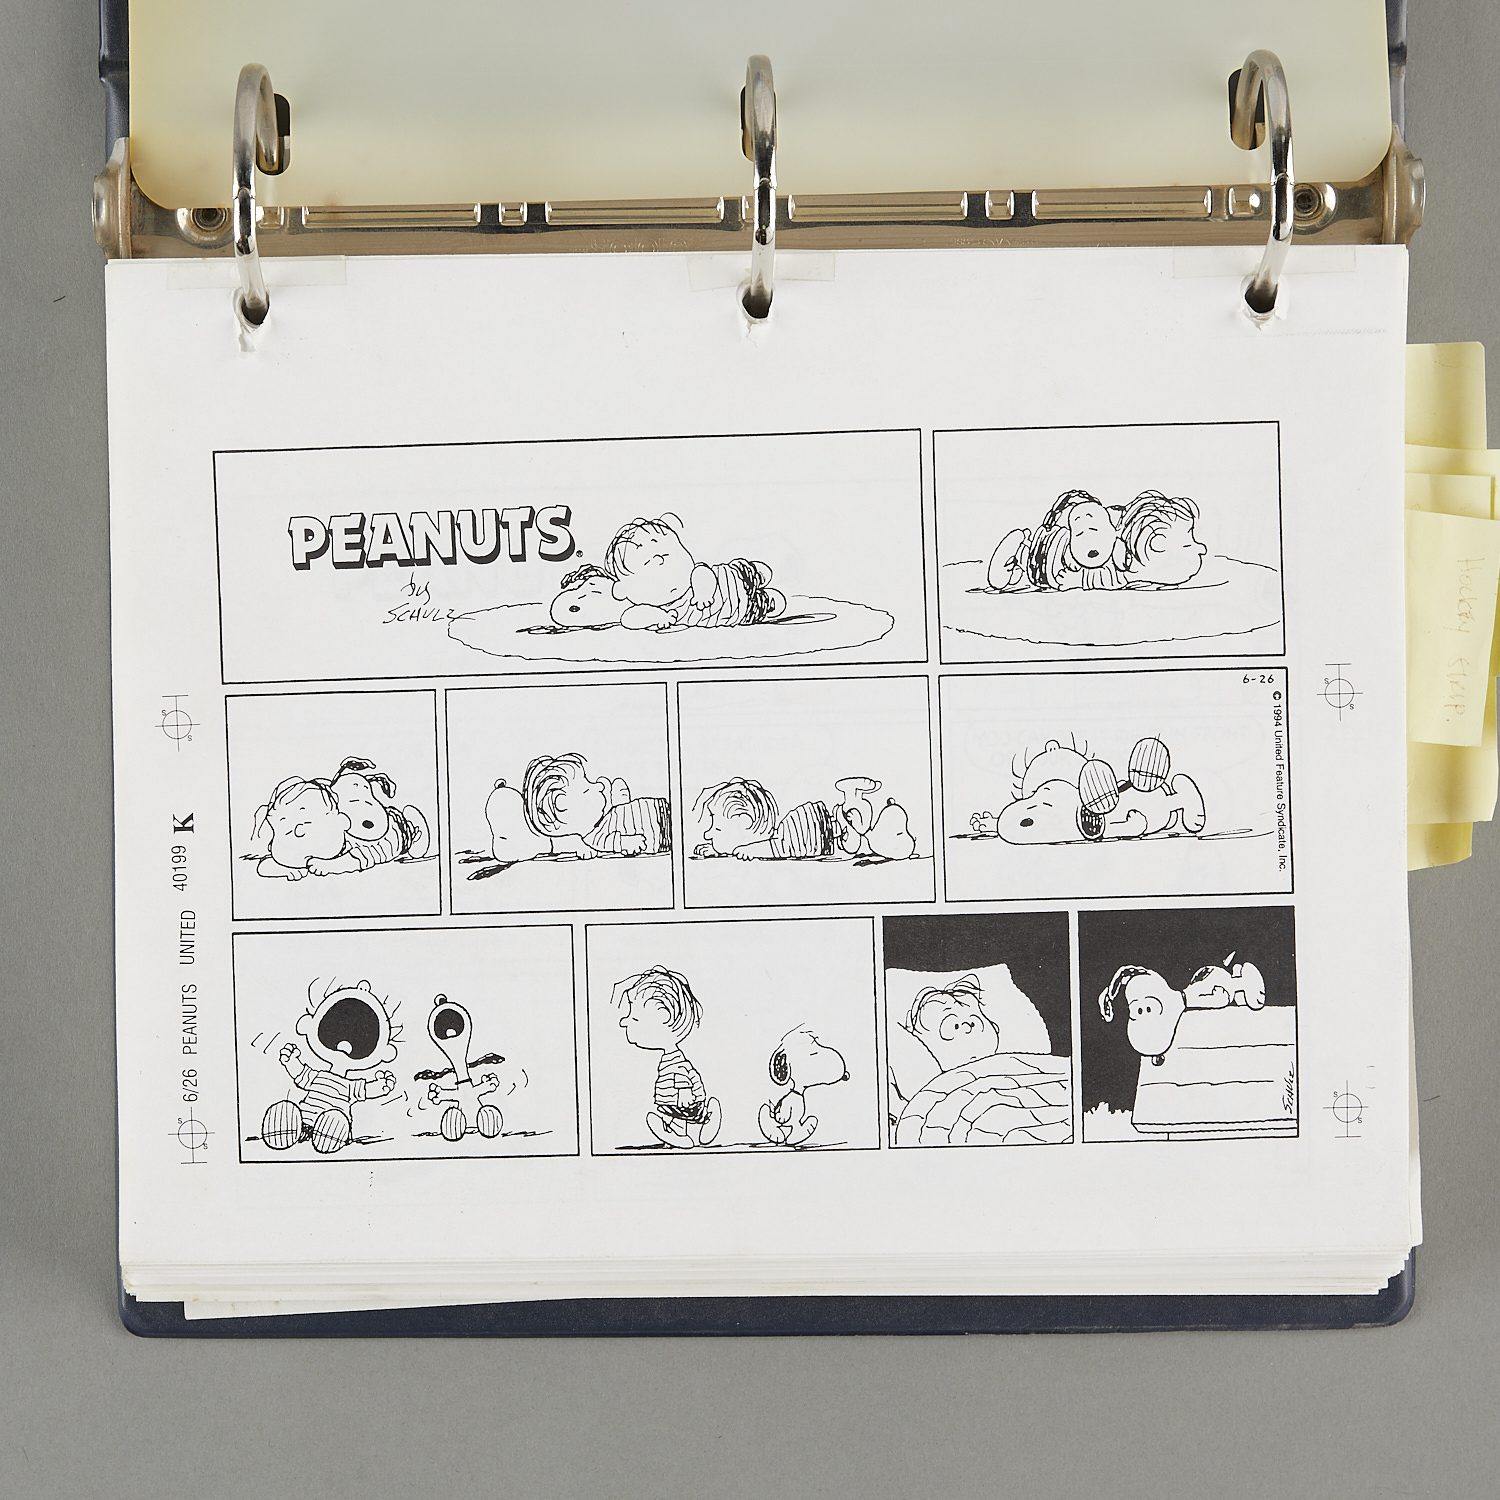 4 Peanuts Binders - Comics & Character Portfolio - Image 8 of 22